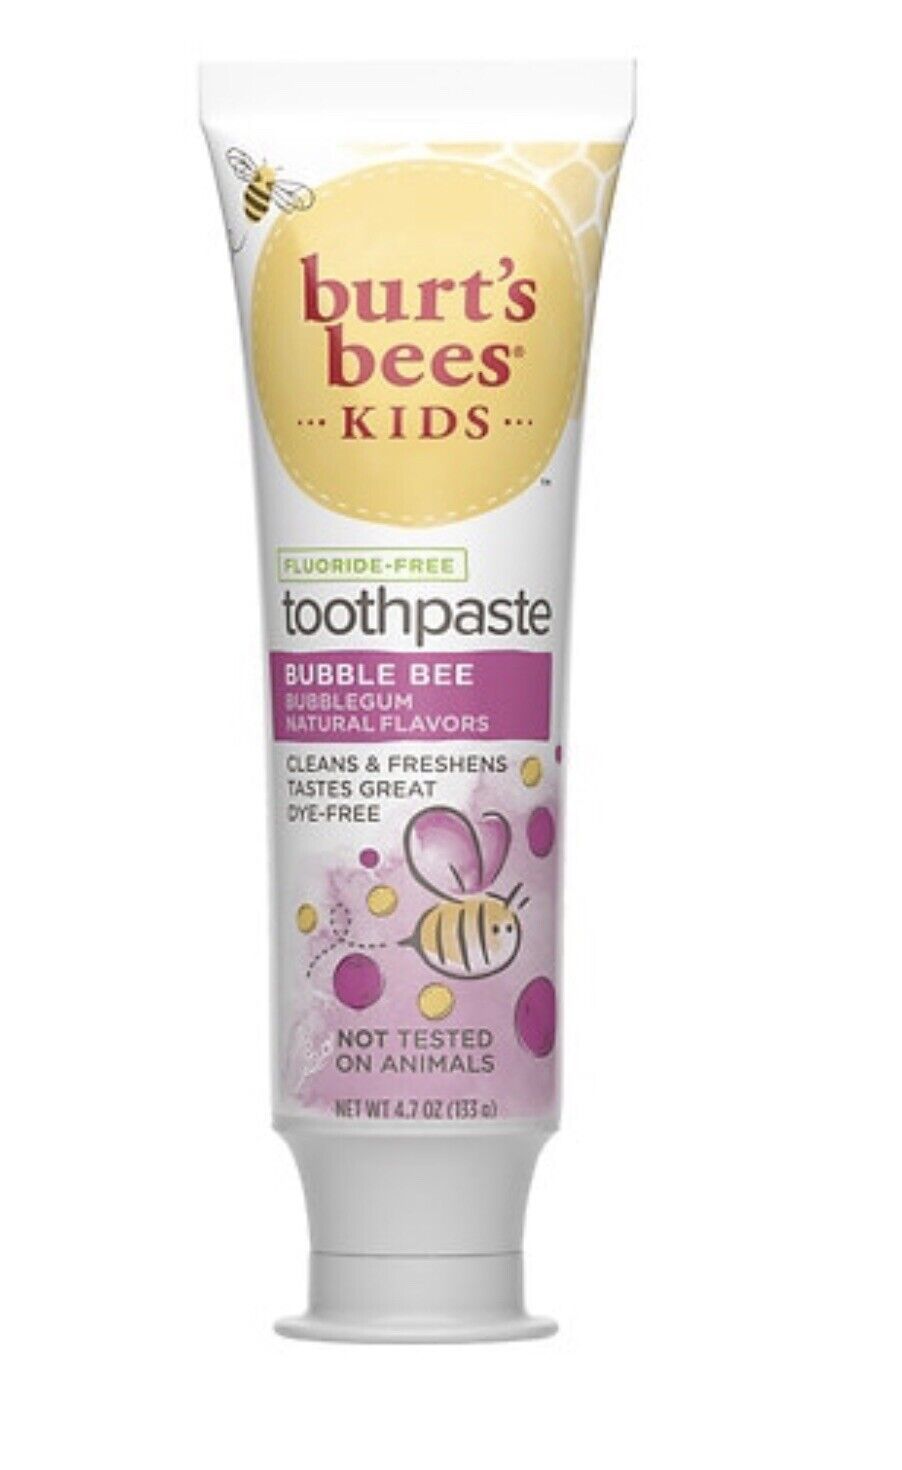 Burt's Bees Kids Toothpaste Fluoride-Free, Bubble Bee Natural Flavor, 4.7 OZ - $4.95